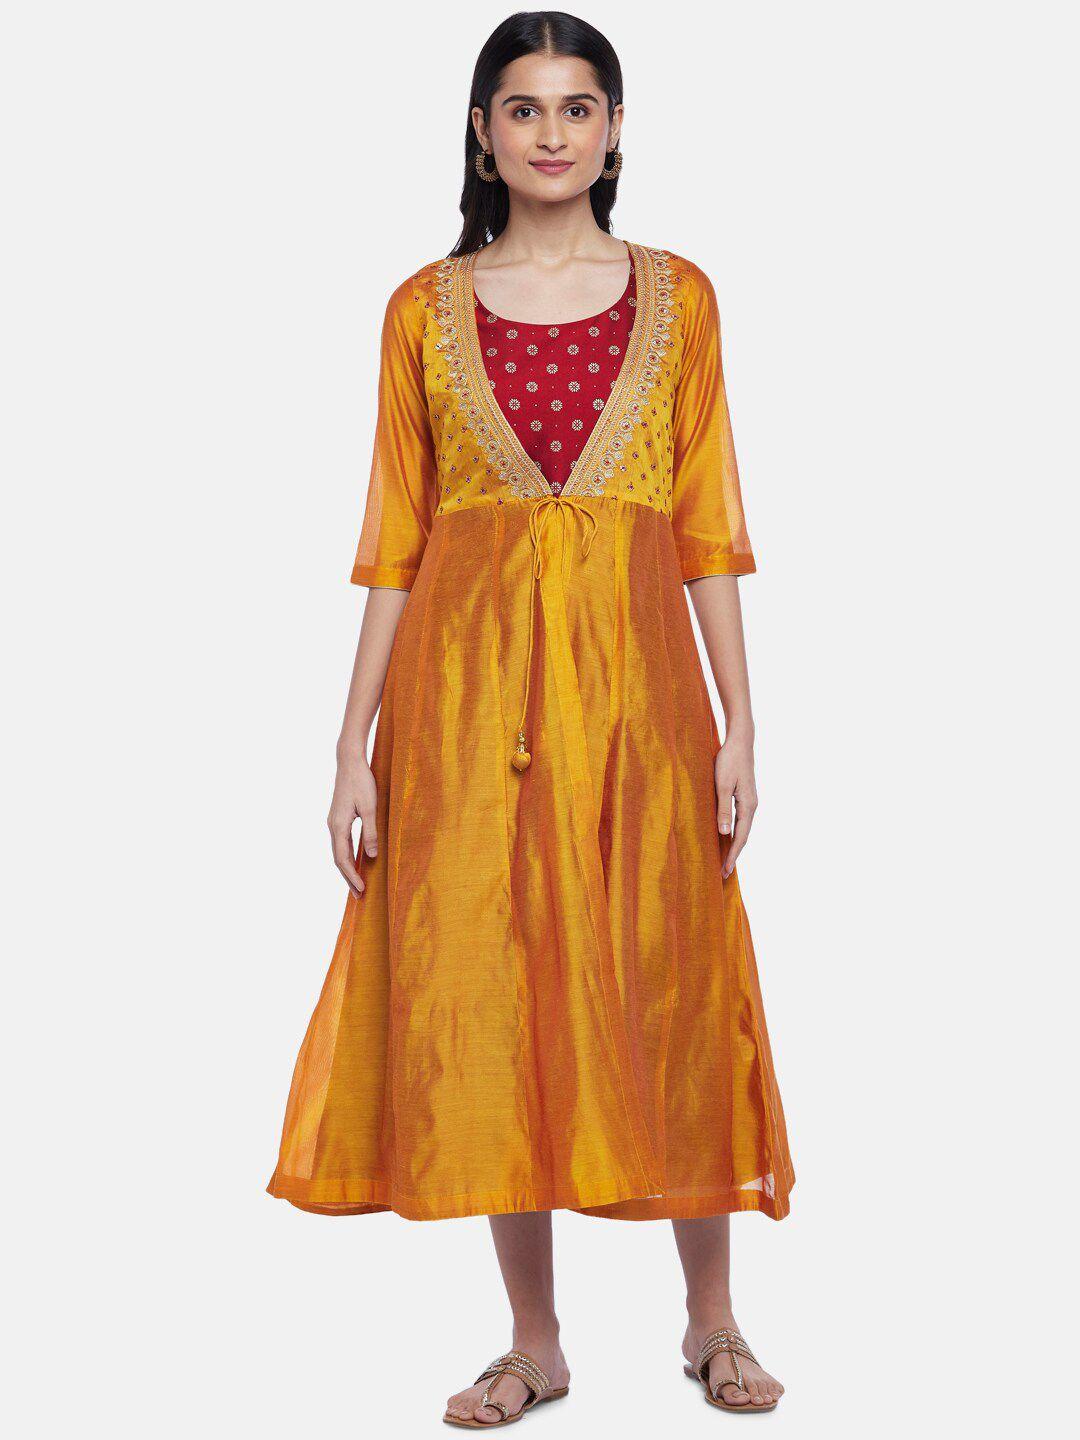 rangmanch by pantaloons women mustard yellow and maroon ethnic print layered midi dress